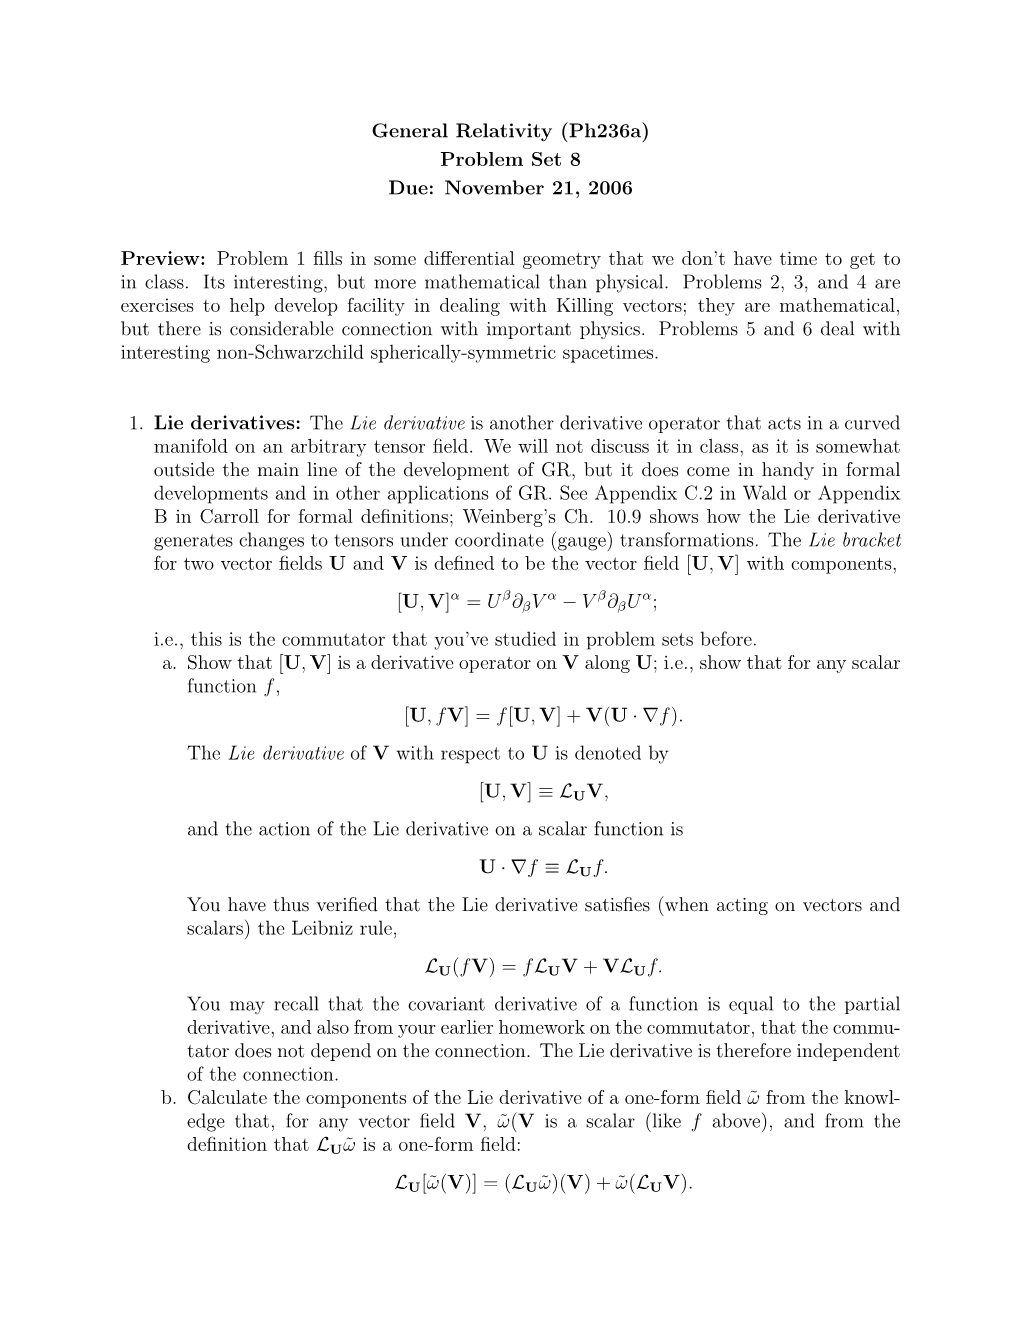 General Relativity (Ph236a) Problem Set 8 Due: November 21, 2006 Preview